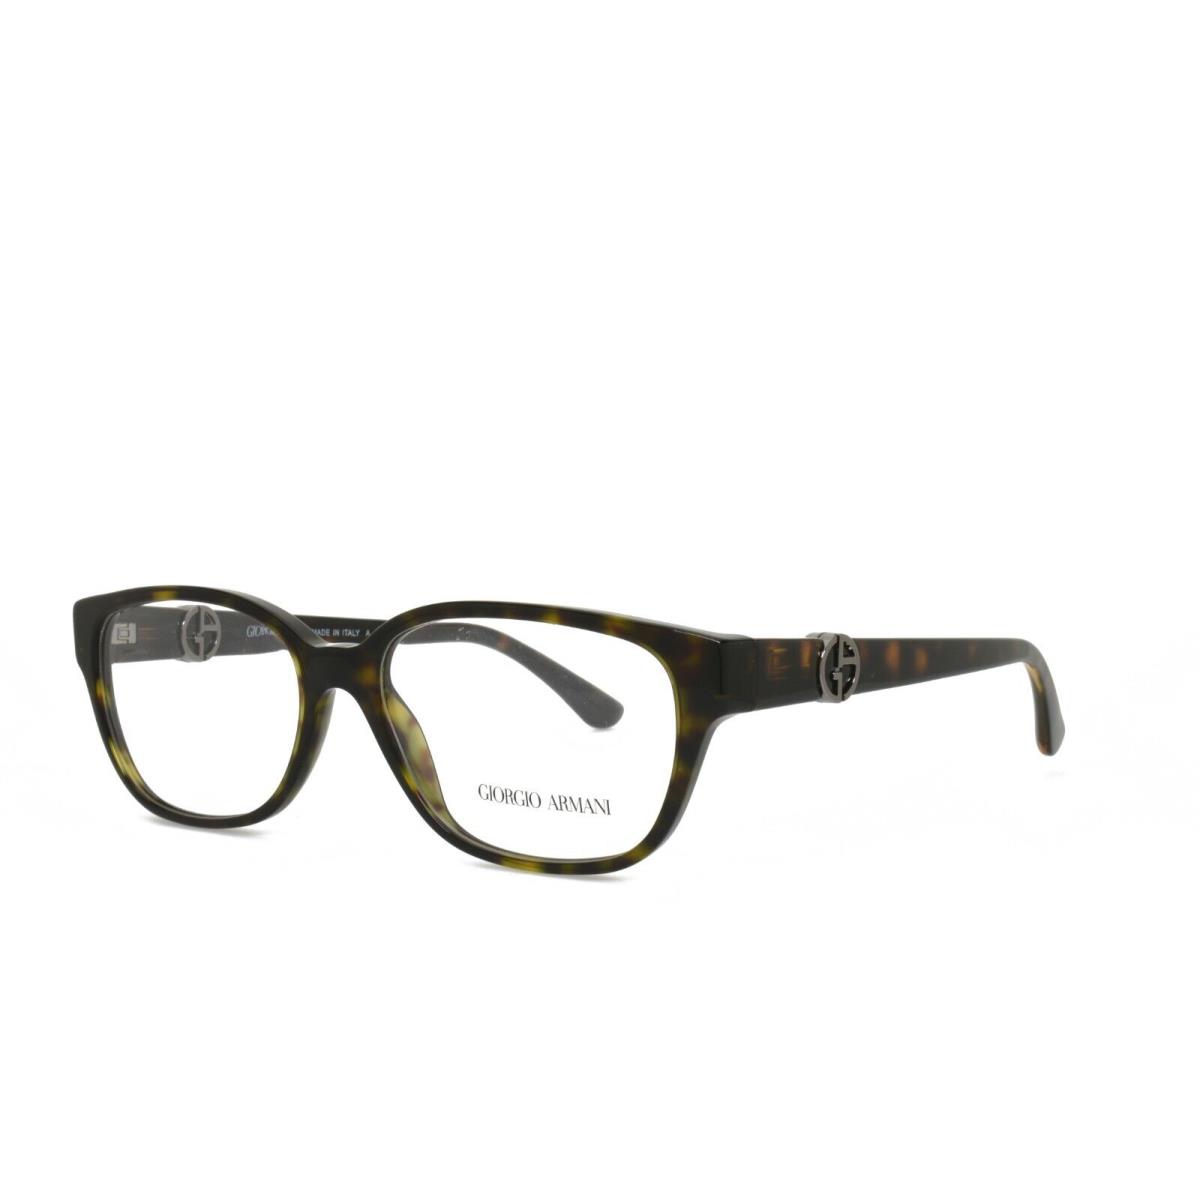 Giorgio Armani 7078 5026 55-16-140 Tortoise Eyeglasses Frames